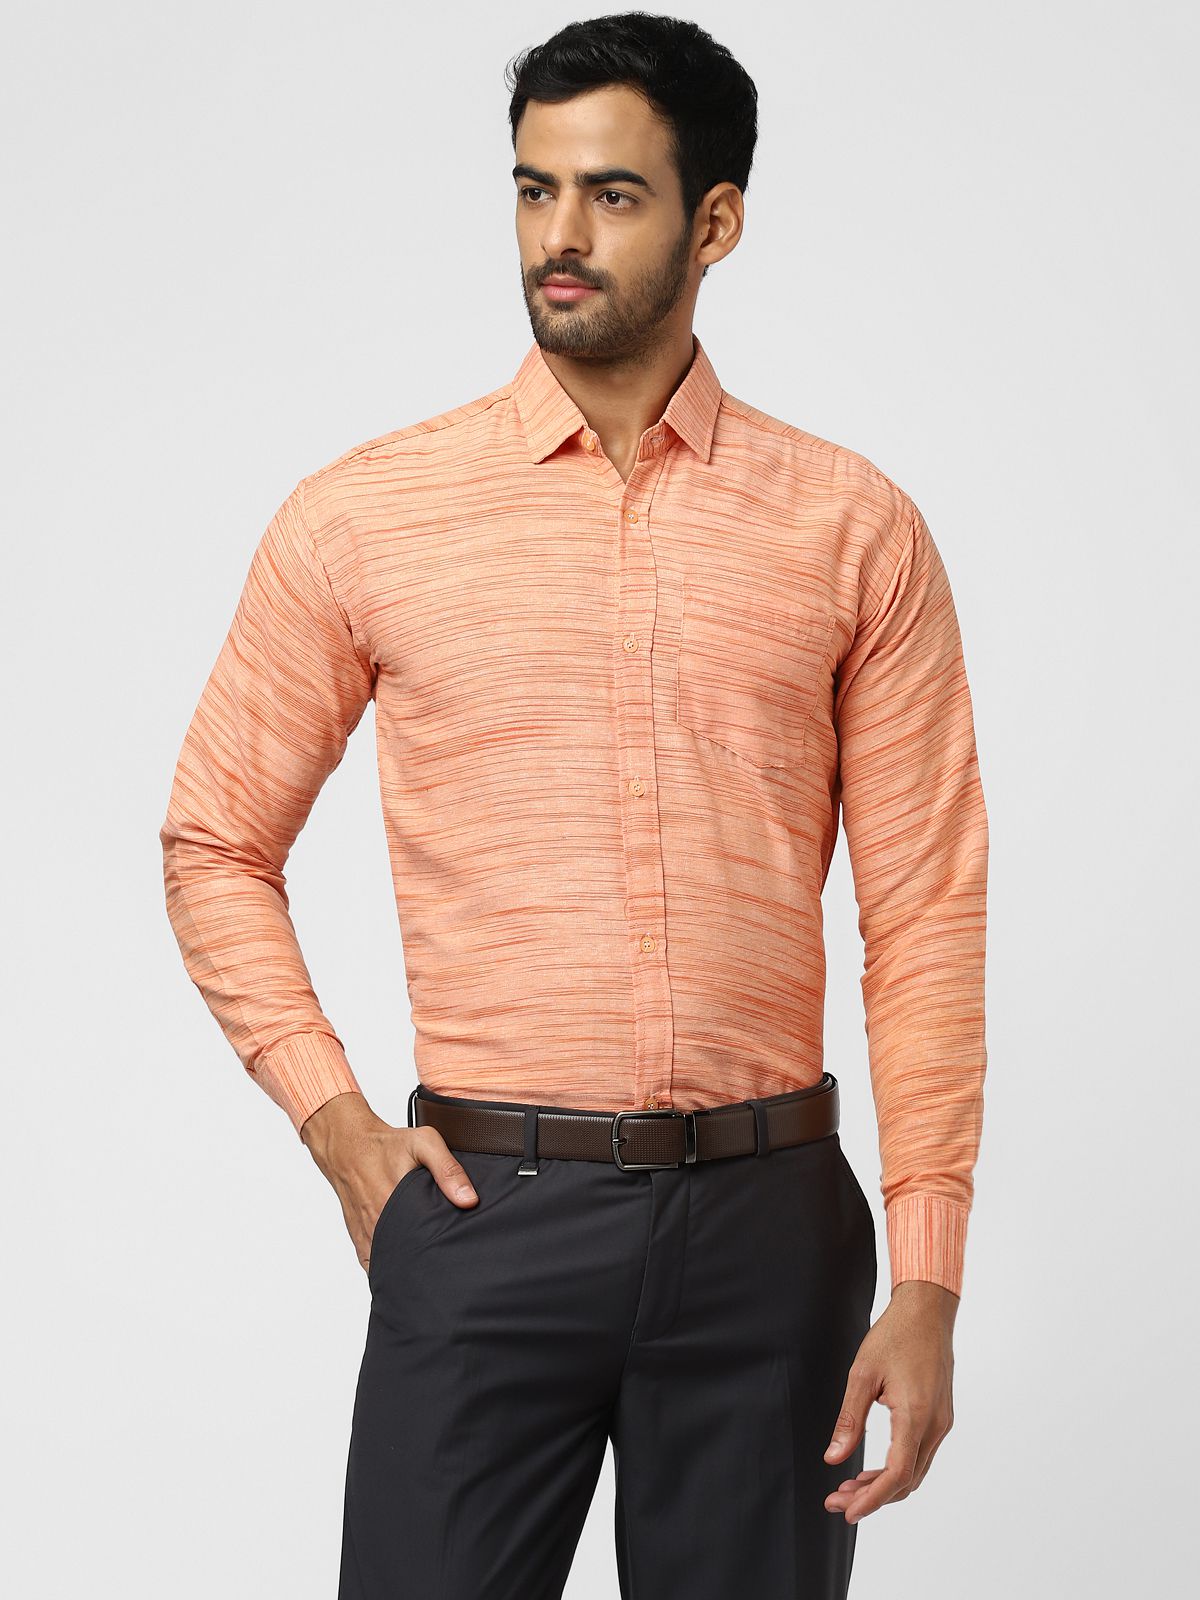     			DESHBANDHU DBK - Orange Cotton Regular Fit Men's Formal Shirt (Pack of 2)